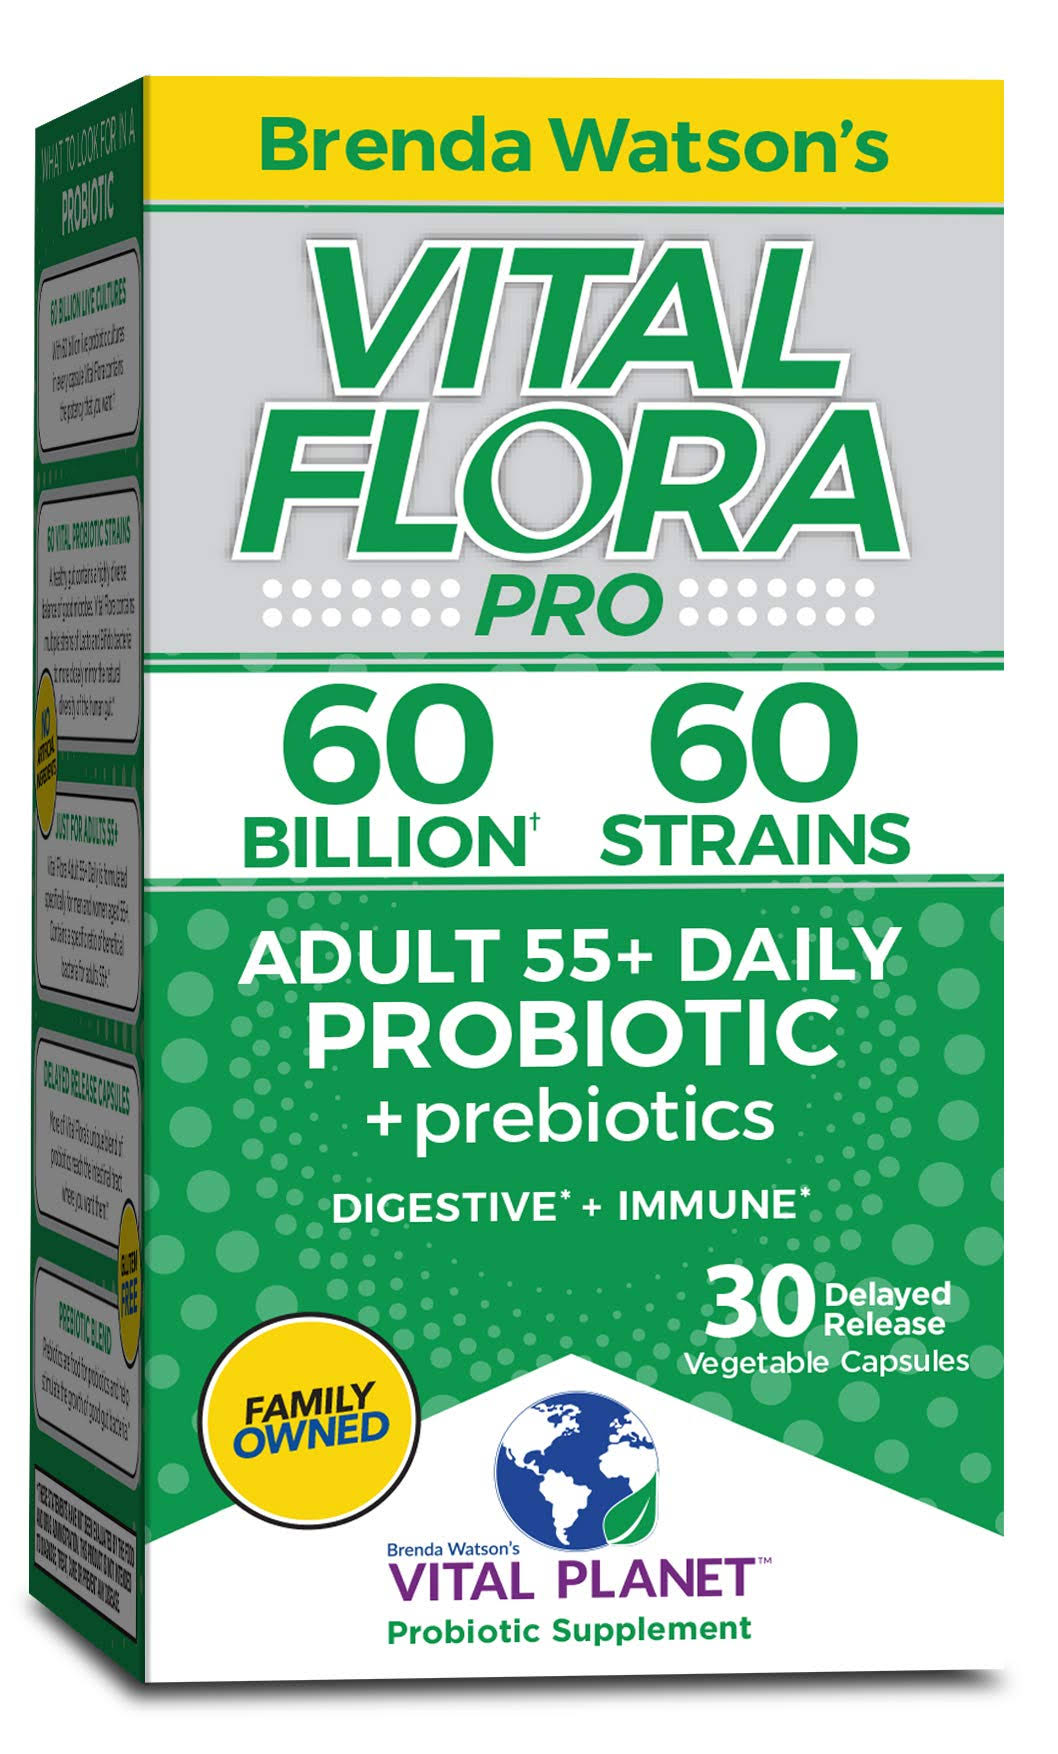 Vital Planet - Vital Flora 60/60 Probiotic Adult 55+ 30 Capsule